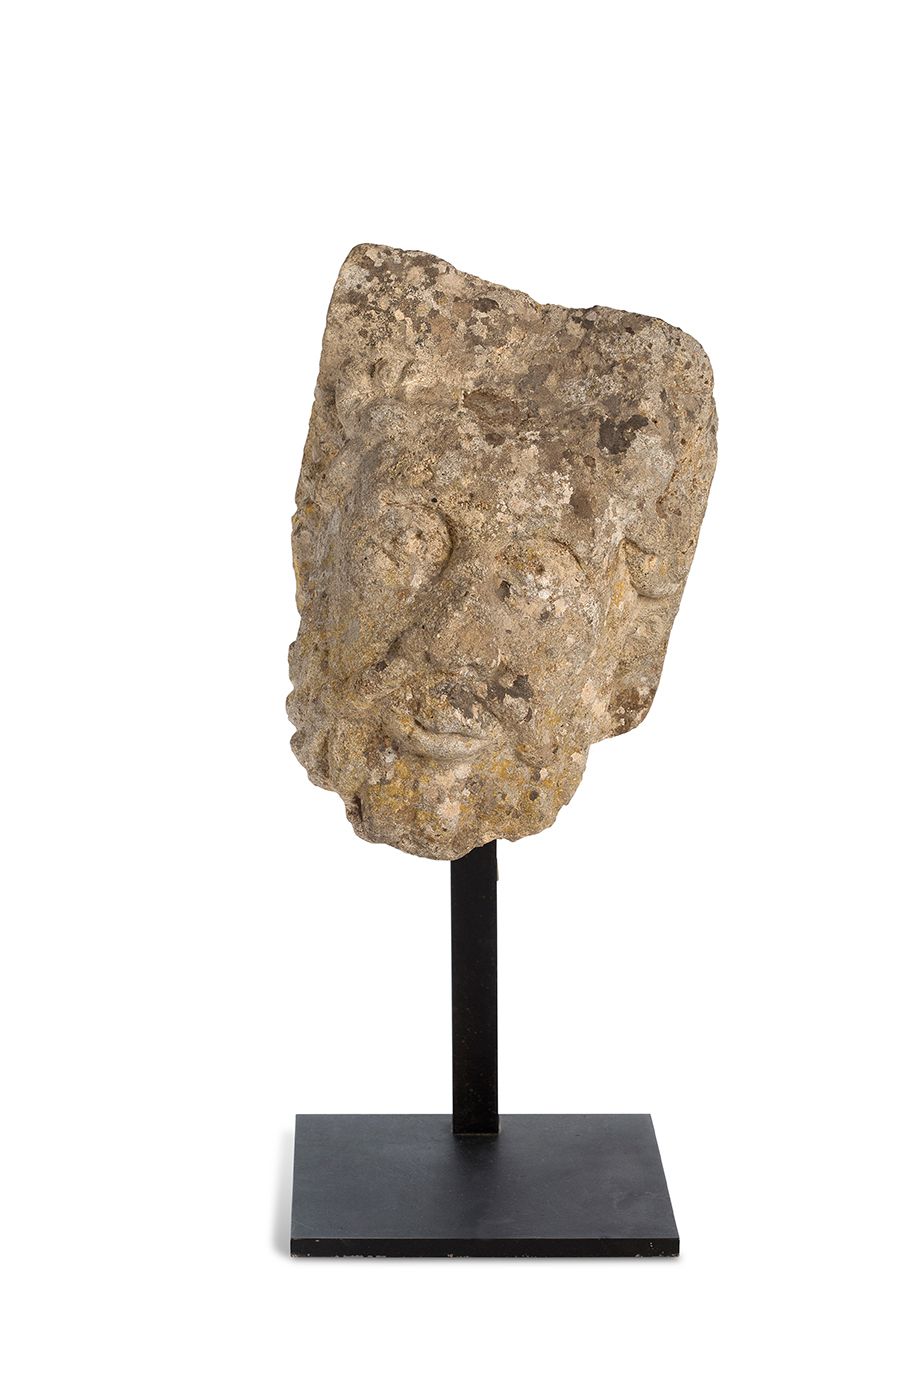 Null 表现大胡子的石雕MODILLON。
安茹，13世纪前三分之一
高29厘米
 （略有侵蚀）。